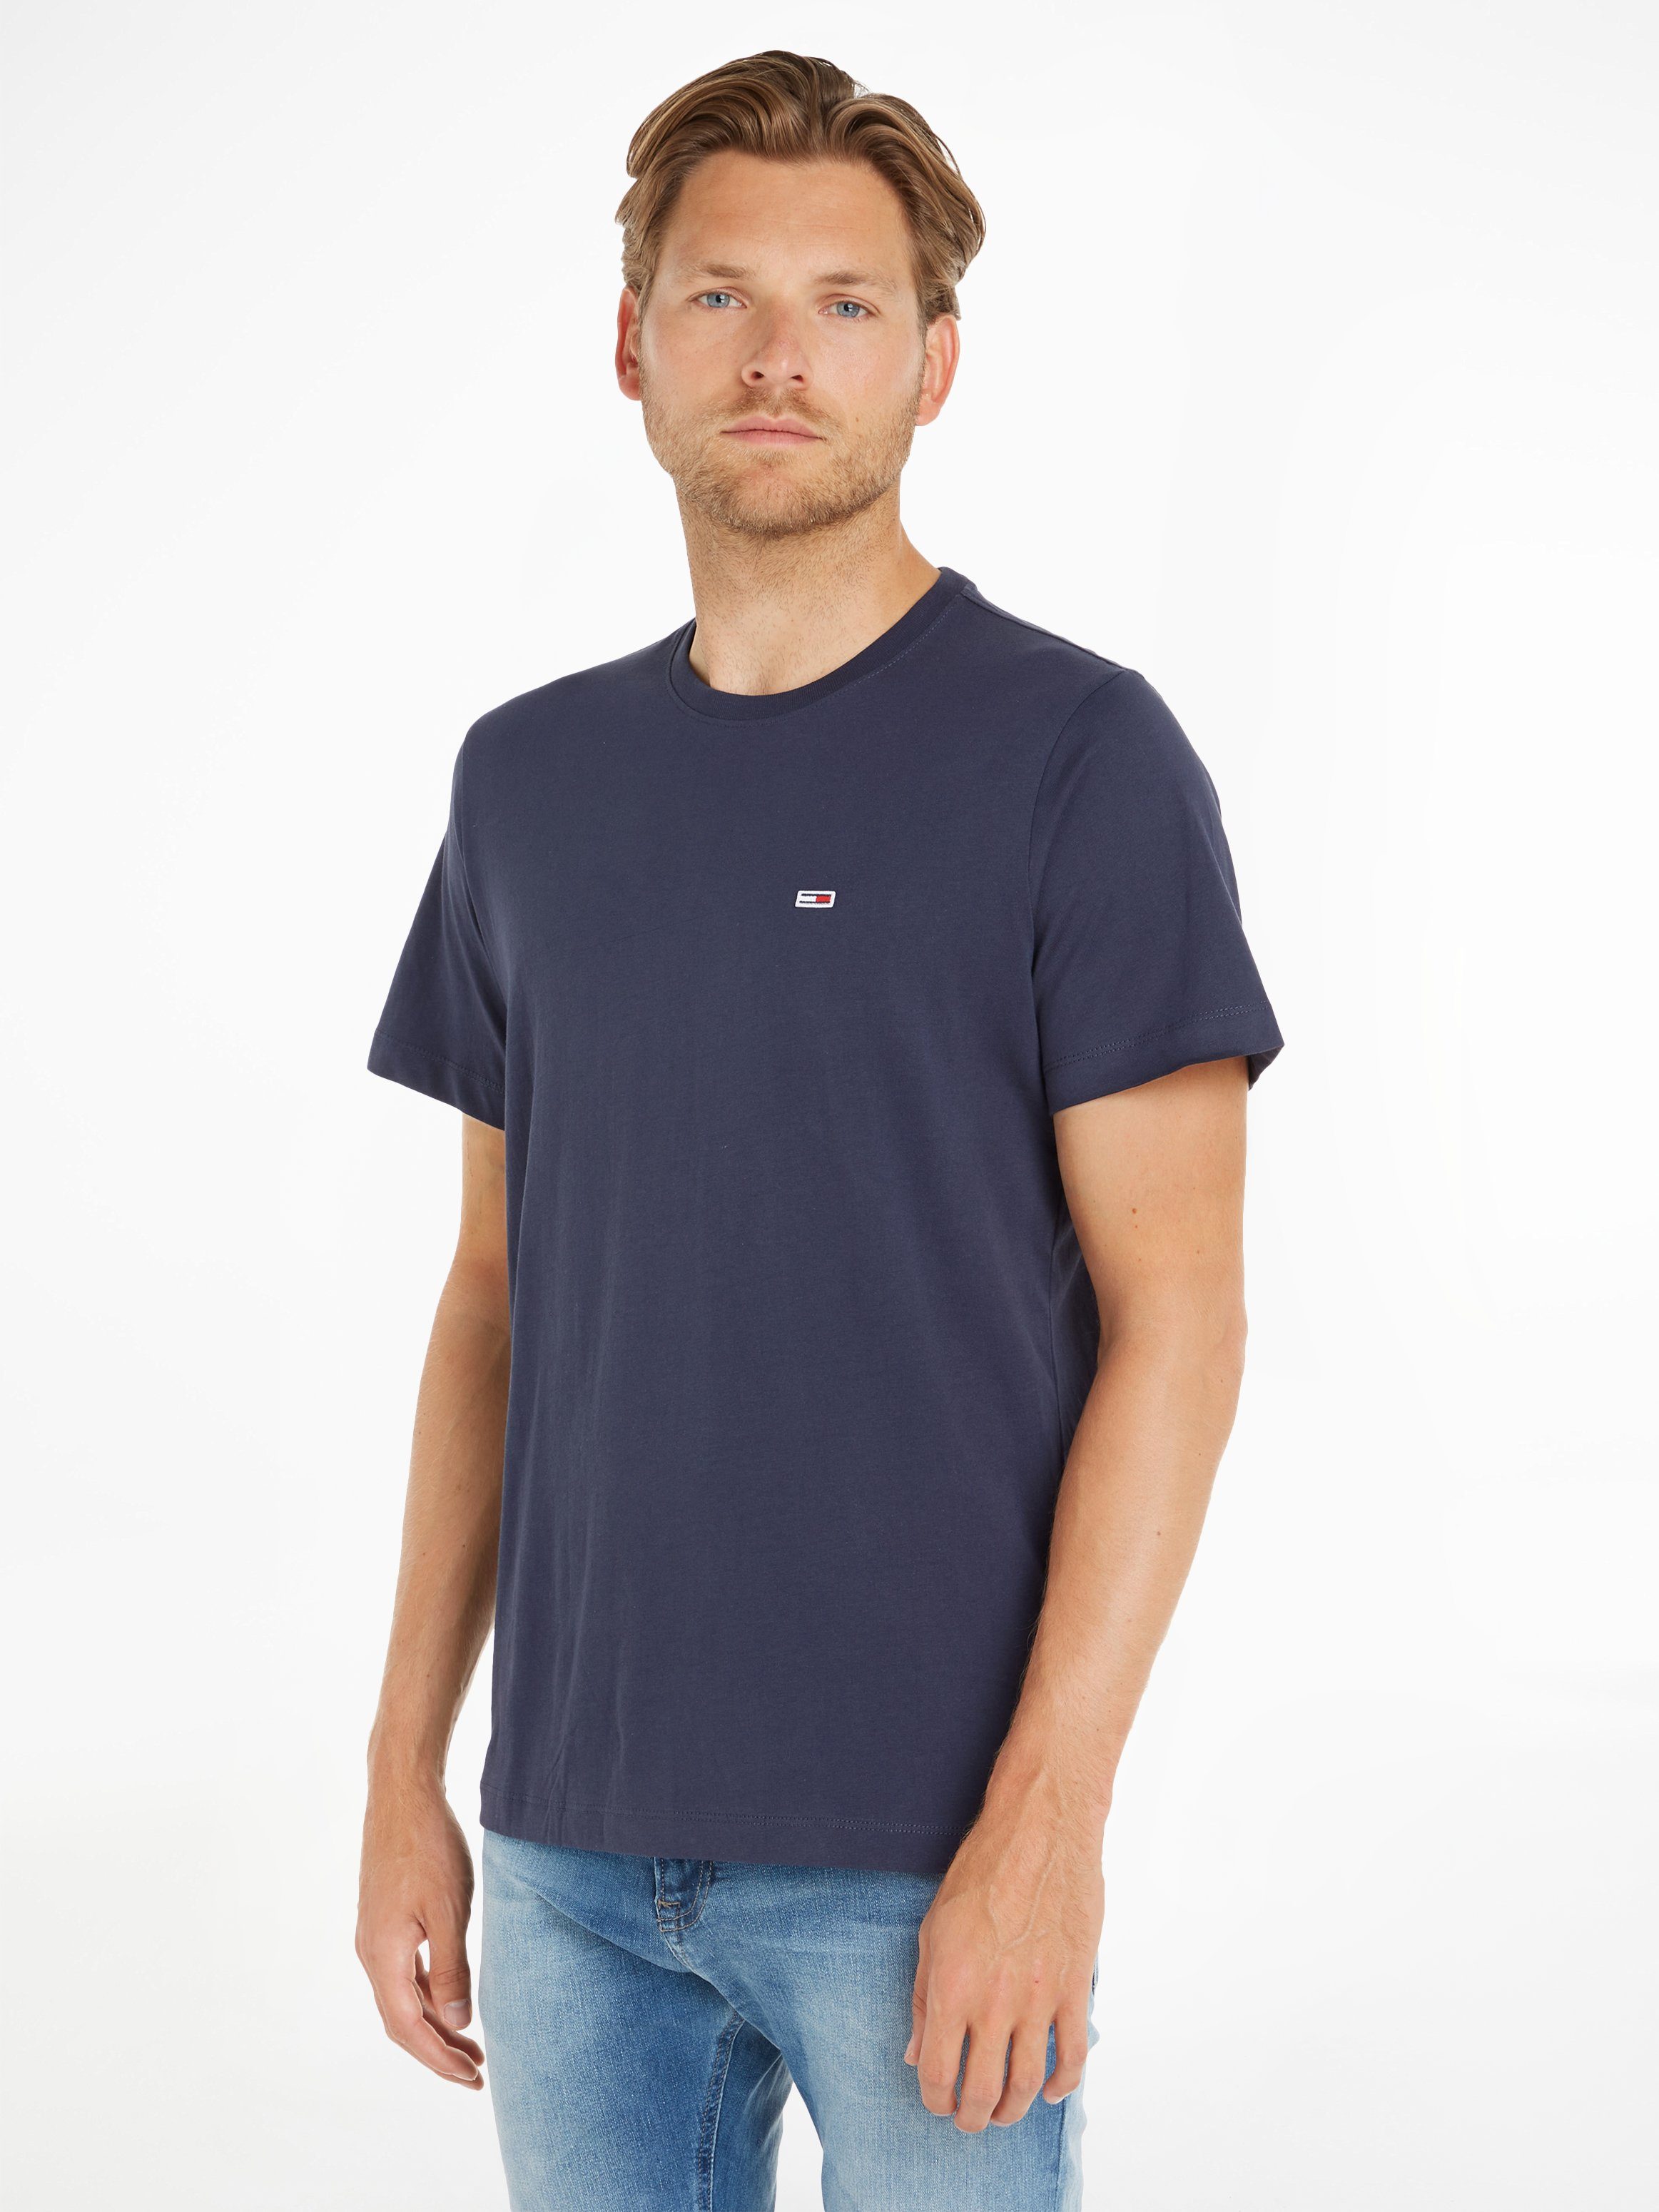 Twilight Jeans JERSEY CLASSIC TJM NECK C Tommy Logostickerei T-Shirt Navy mit